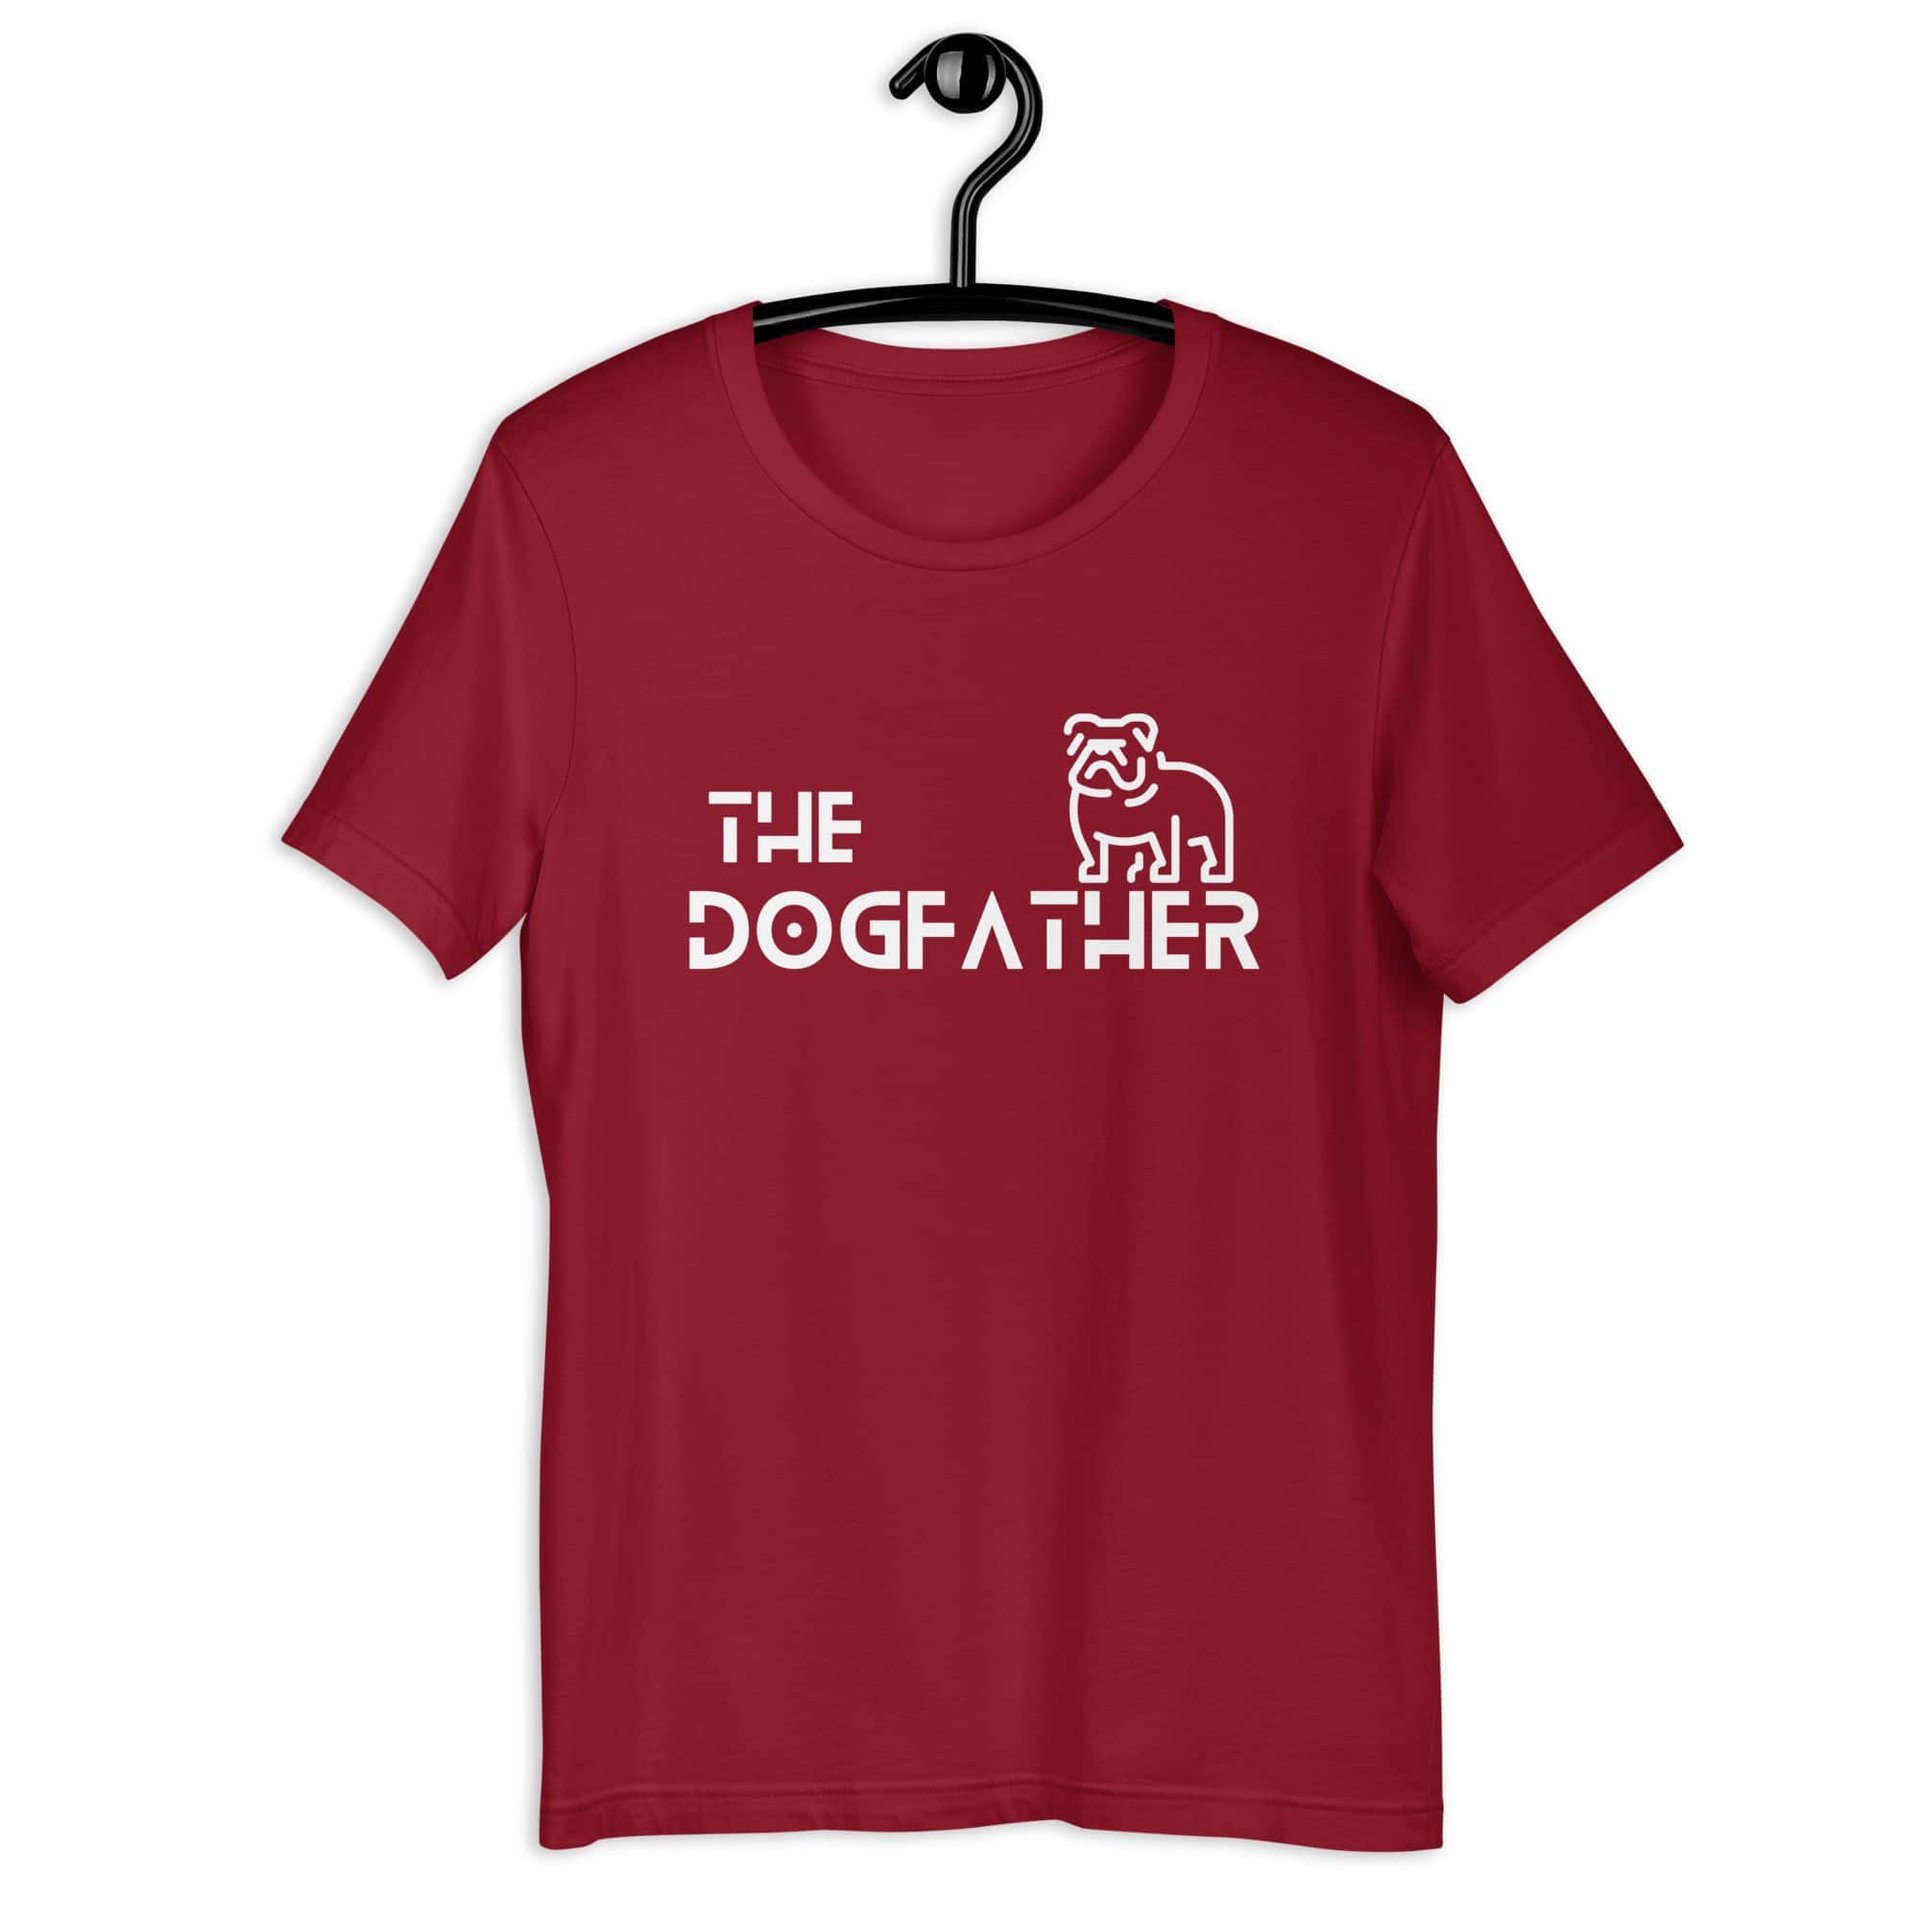 The Dogfather Bulldog Unisex T-Shirt. Burgundy